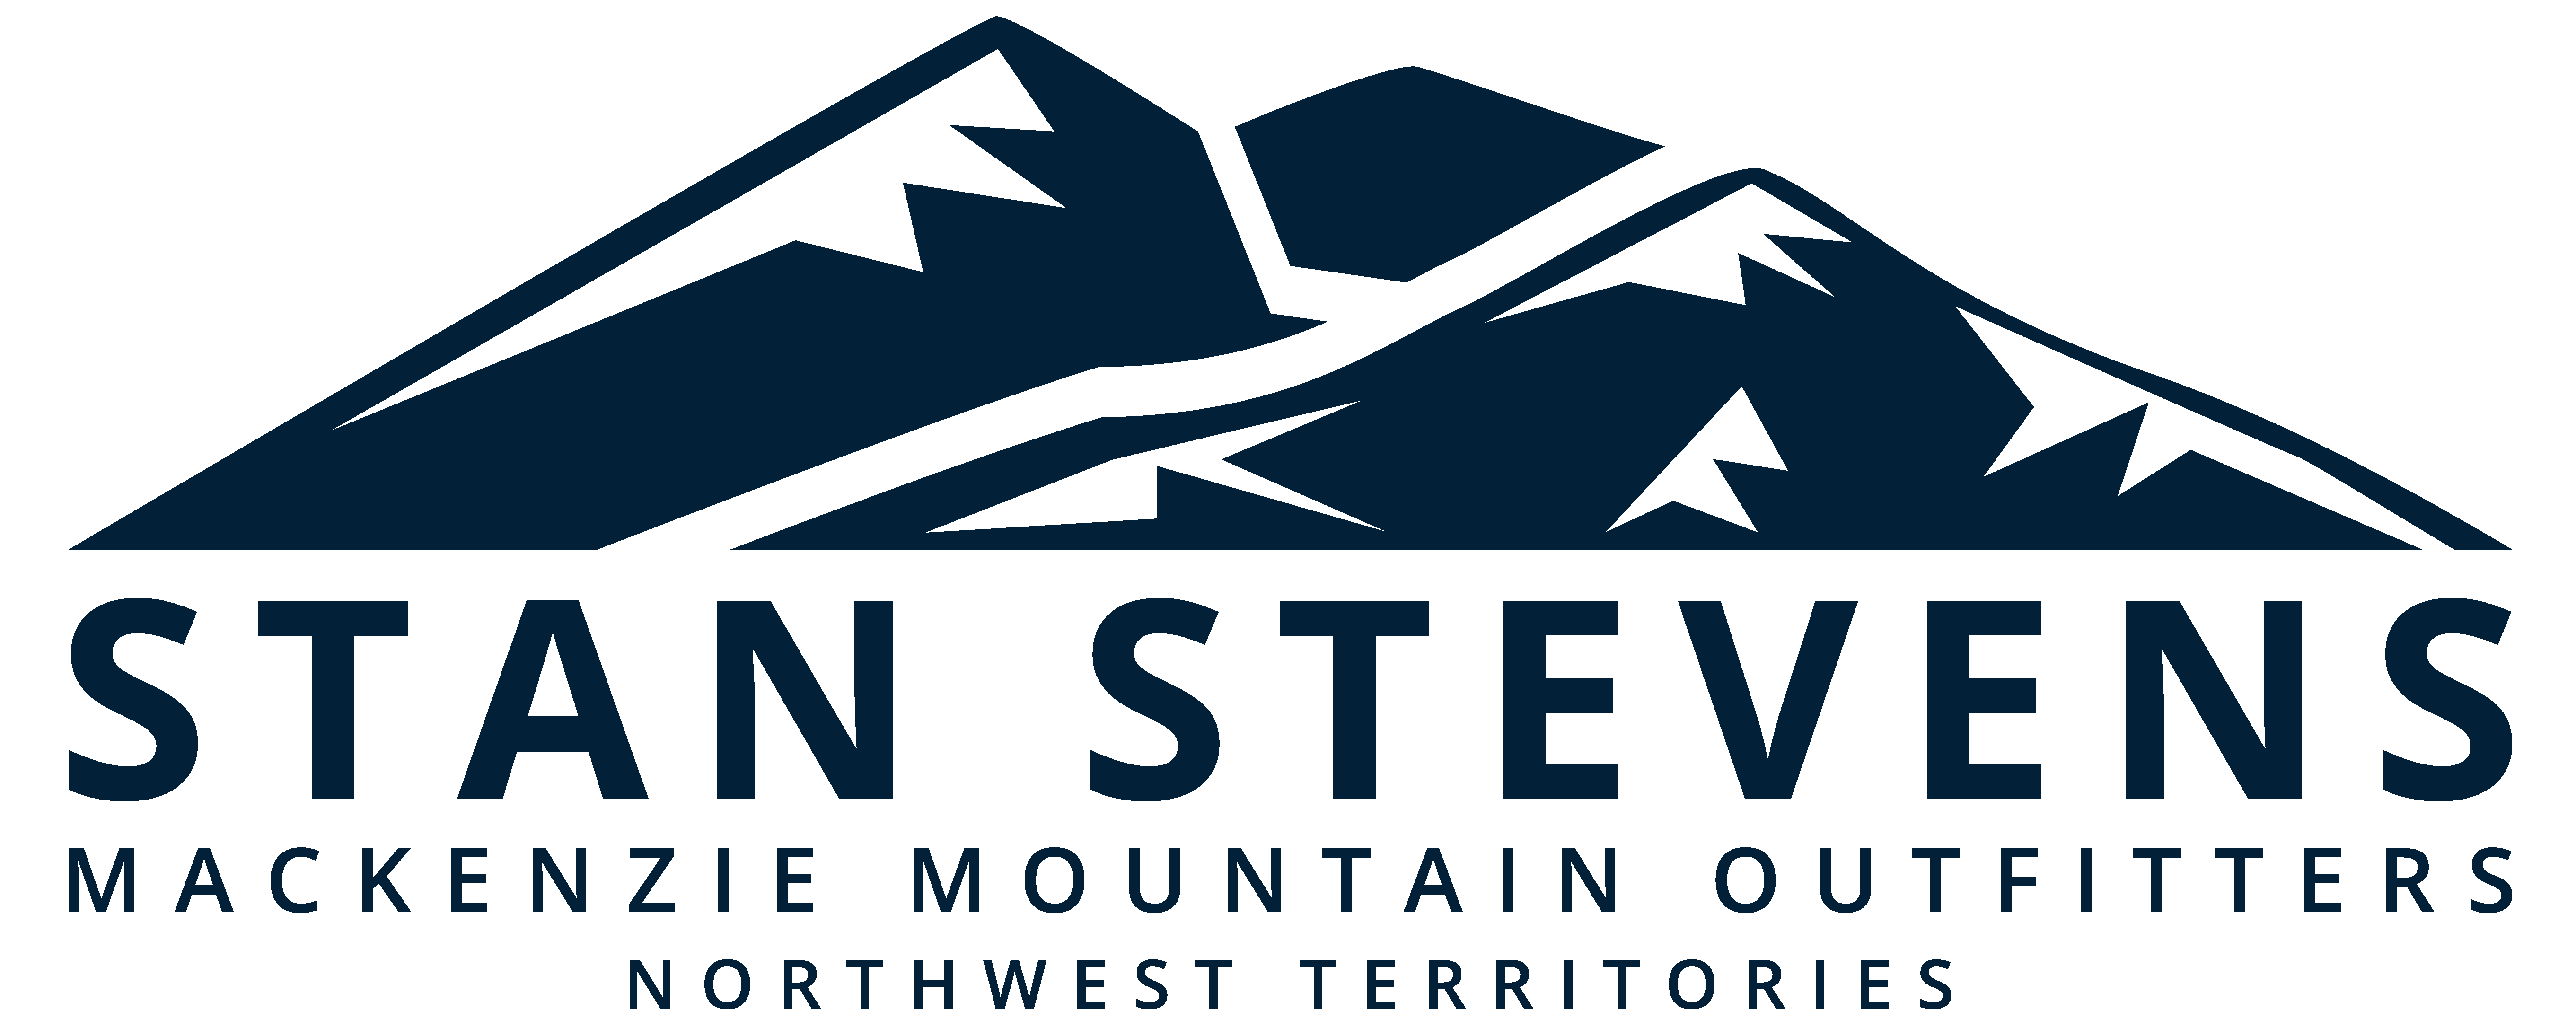 Stan Stevens Mackenzie Mountain Outfitters Ltd.